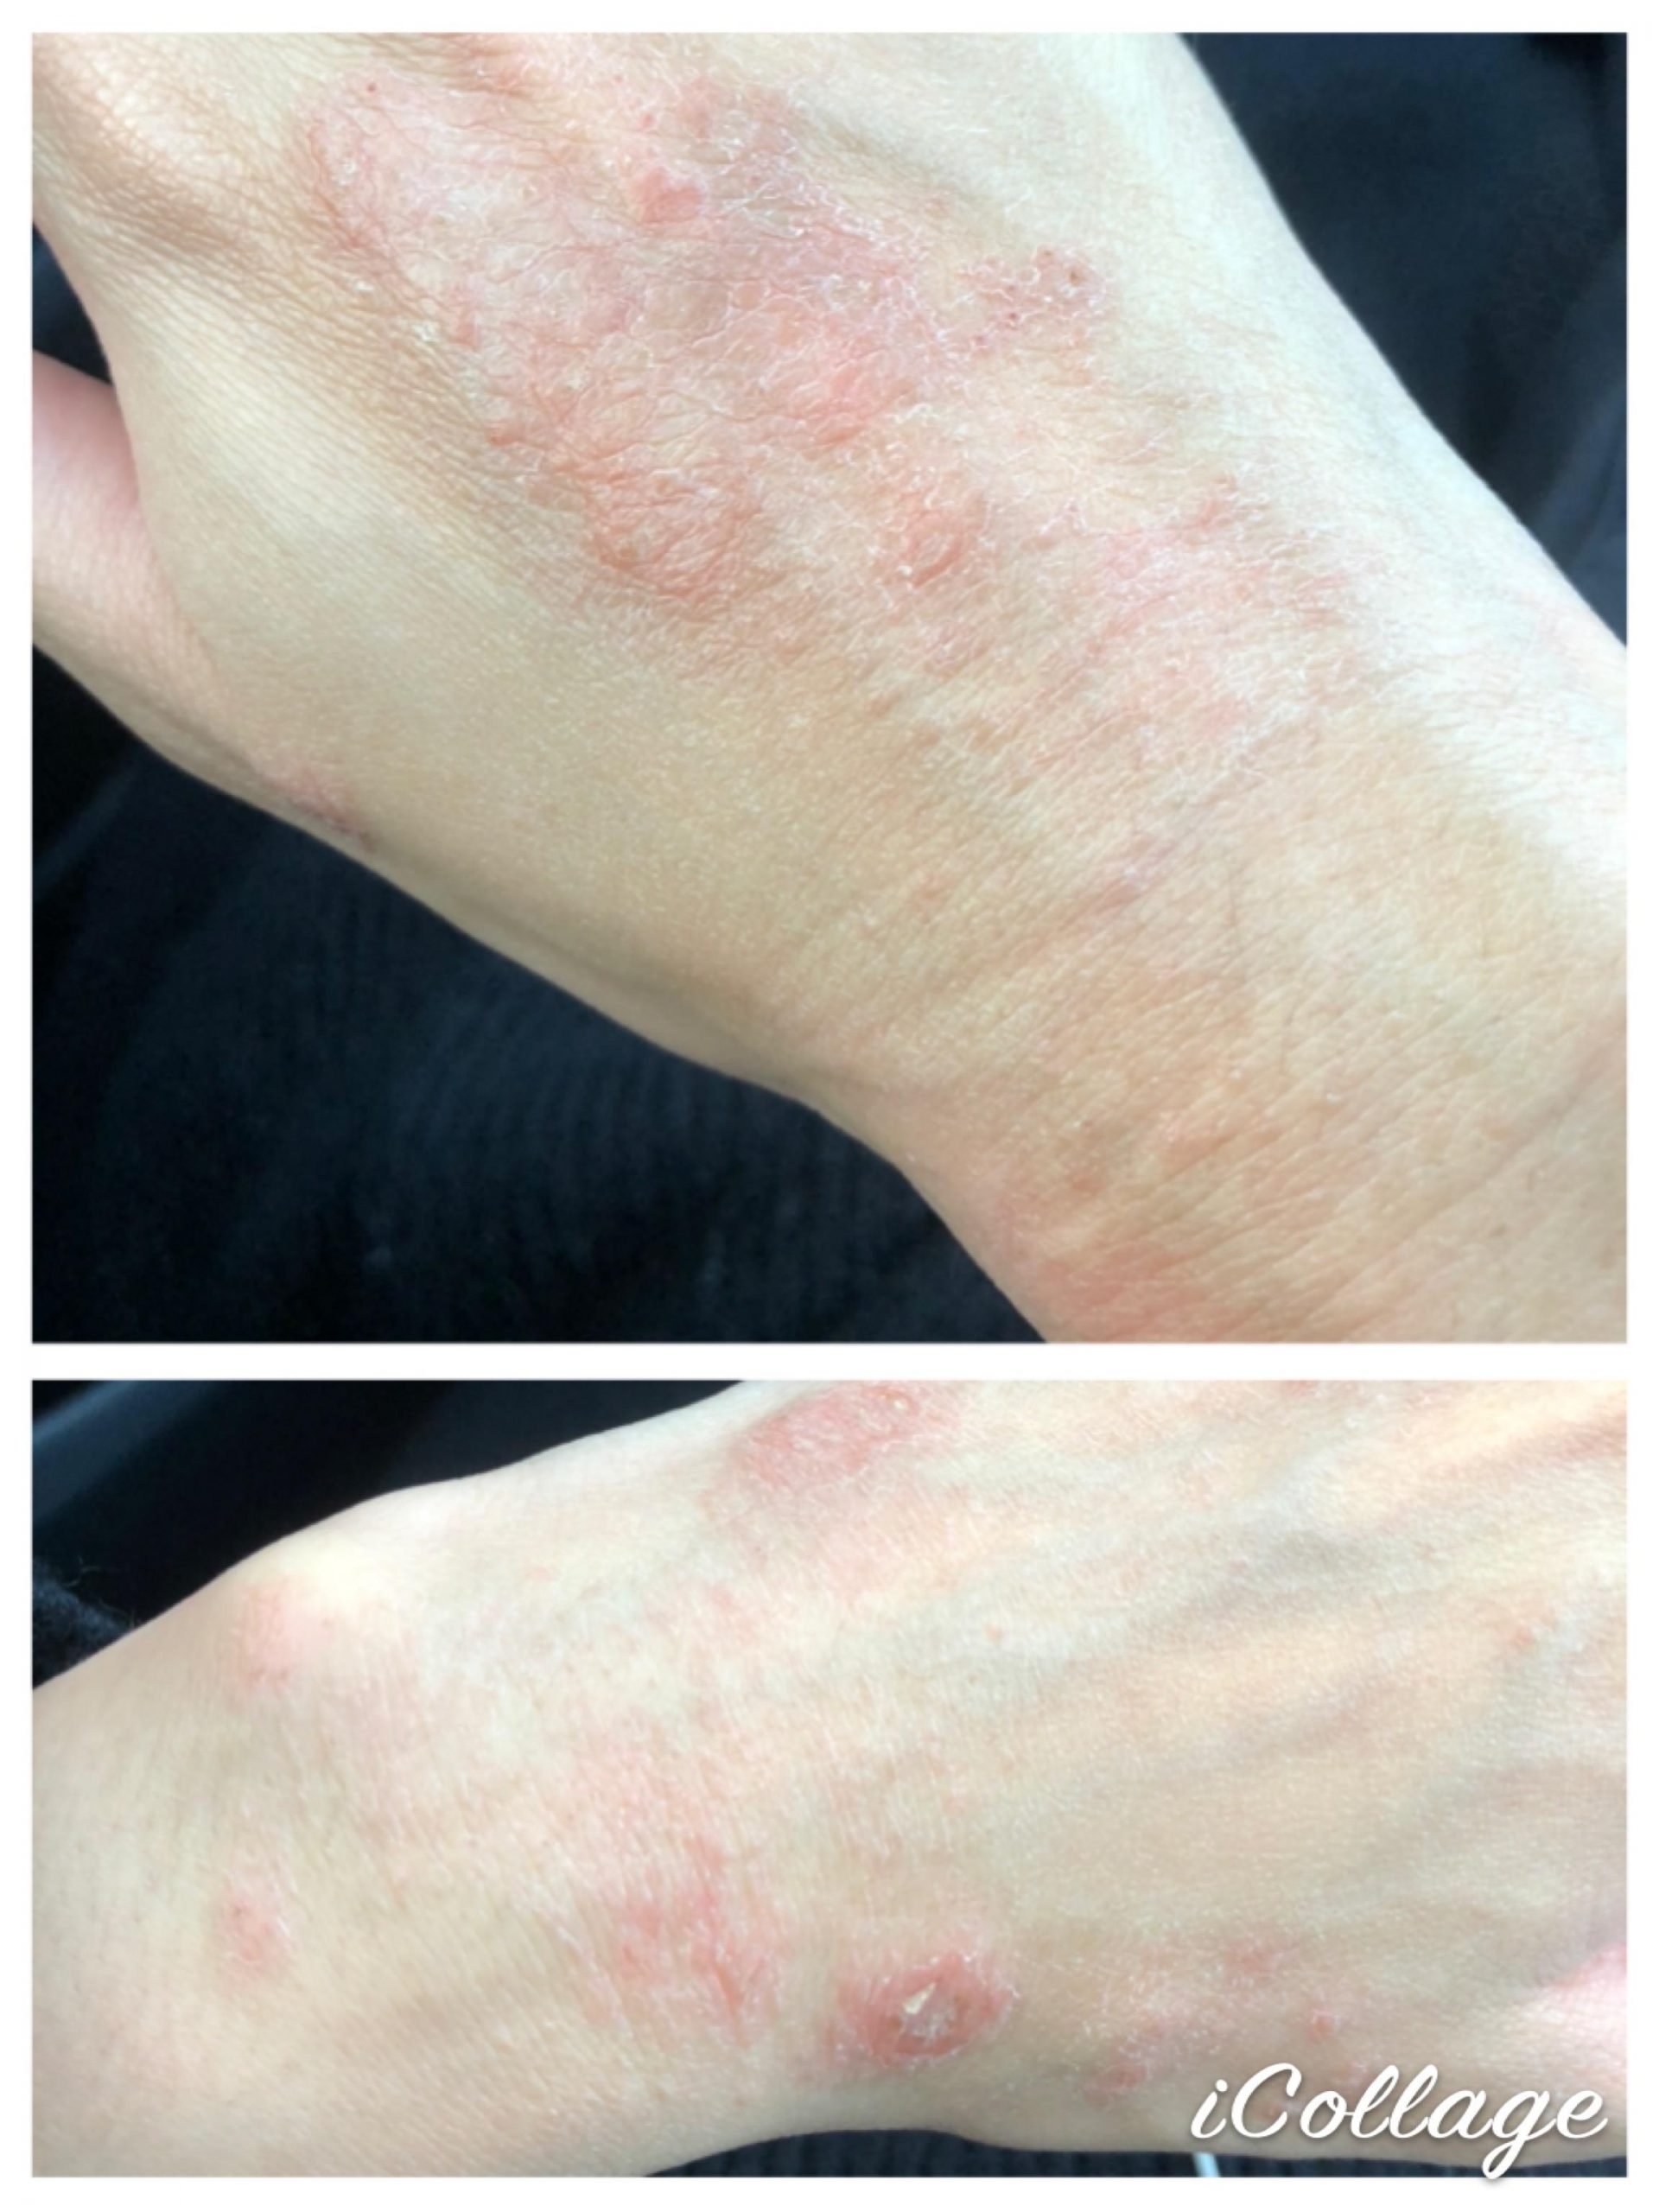 Eczema flaring up on hands like never before : Accutane